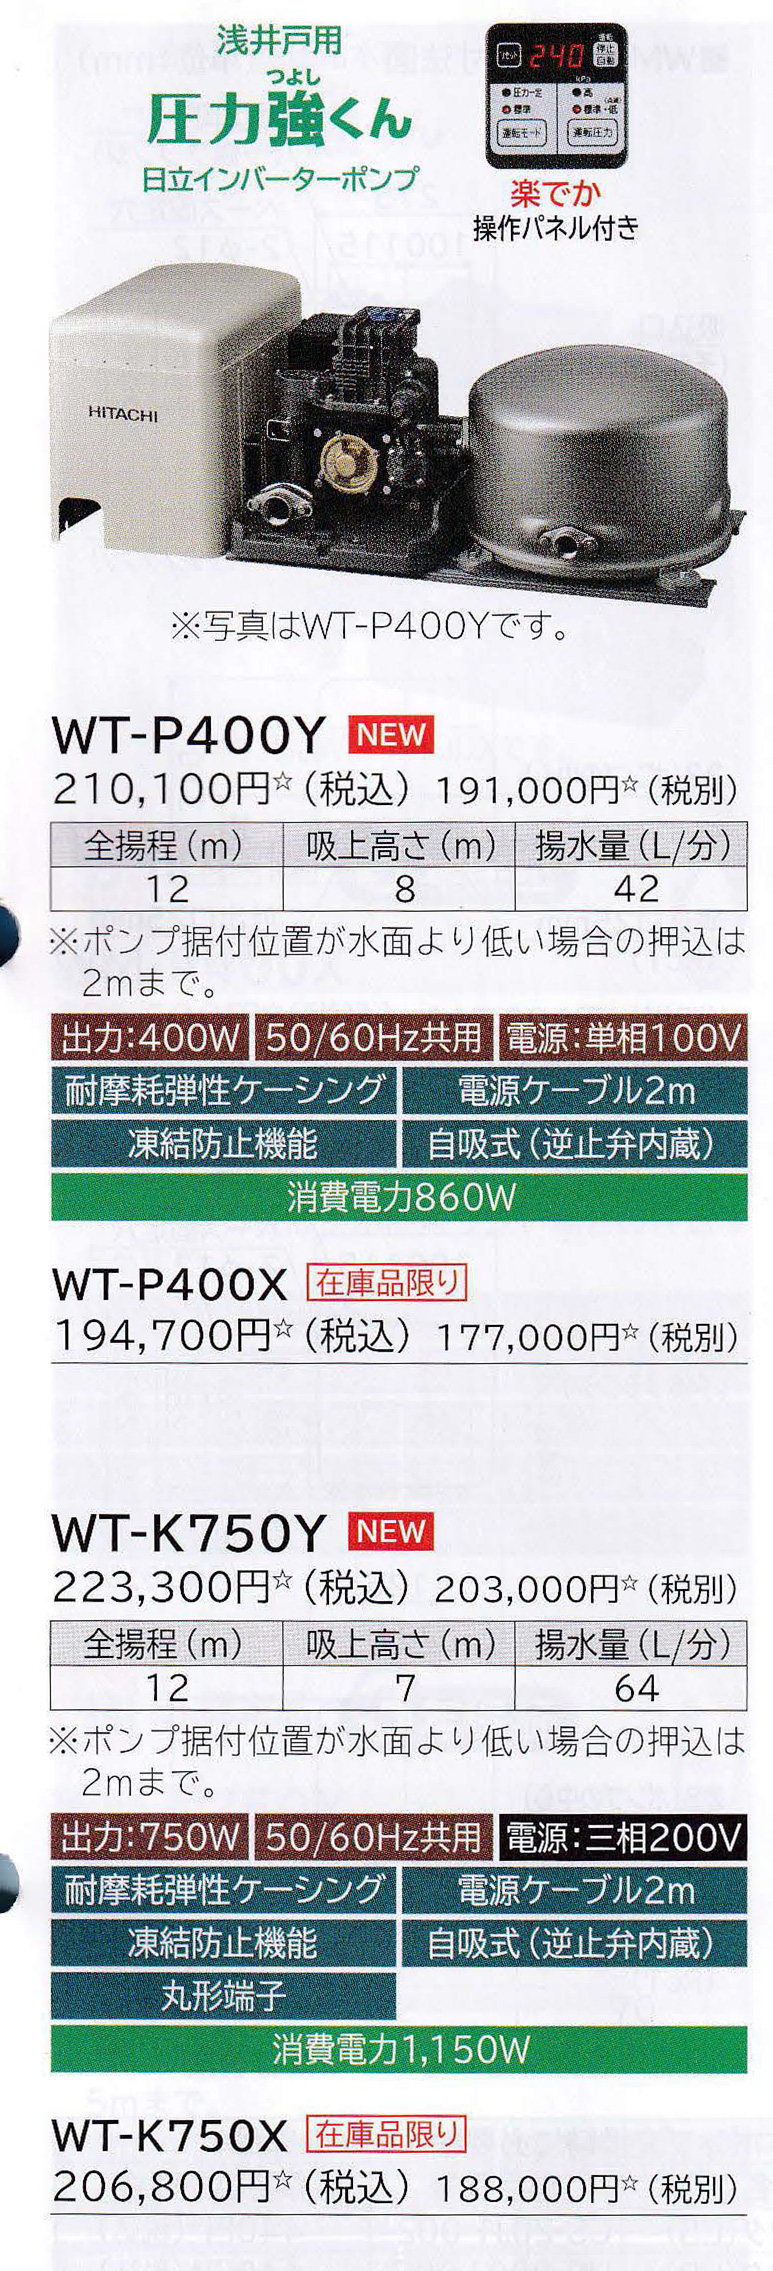 67%OFF!】 日立 浅井戸用 インバーターポンプ WT-K750Y fucoa.cl